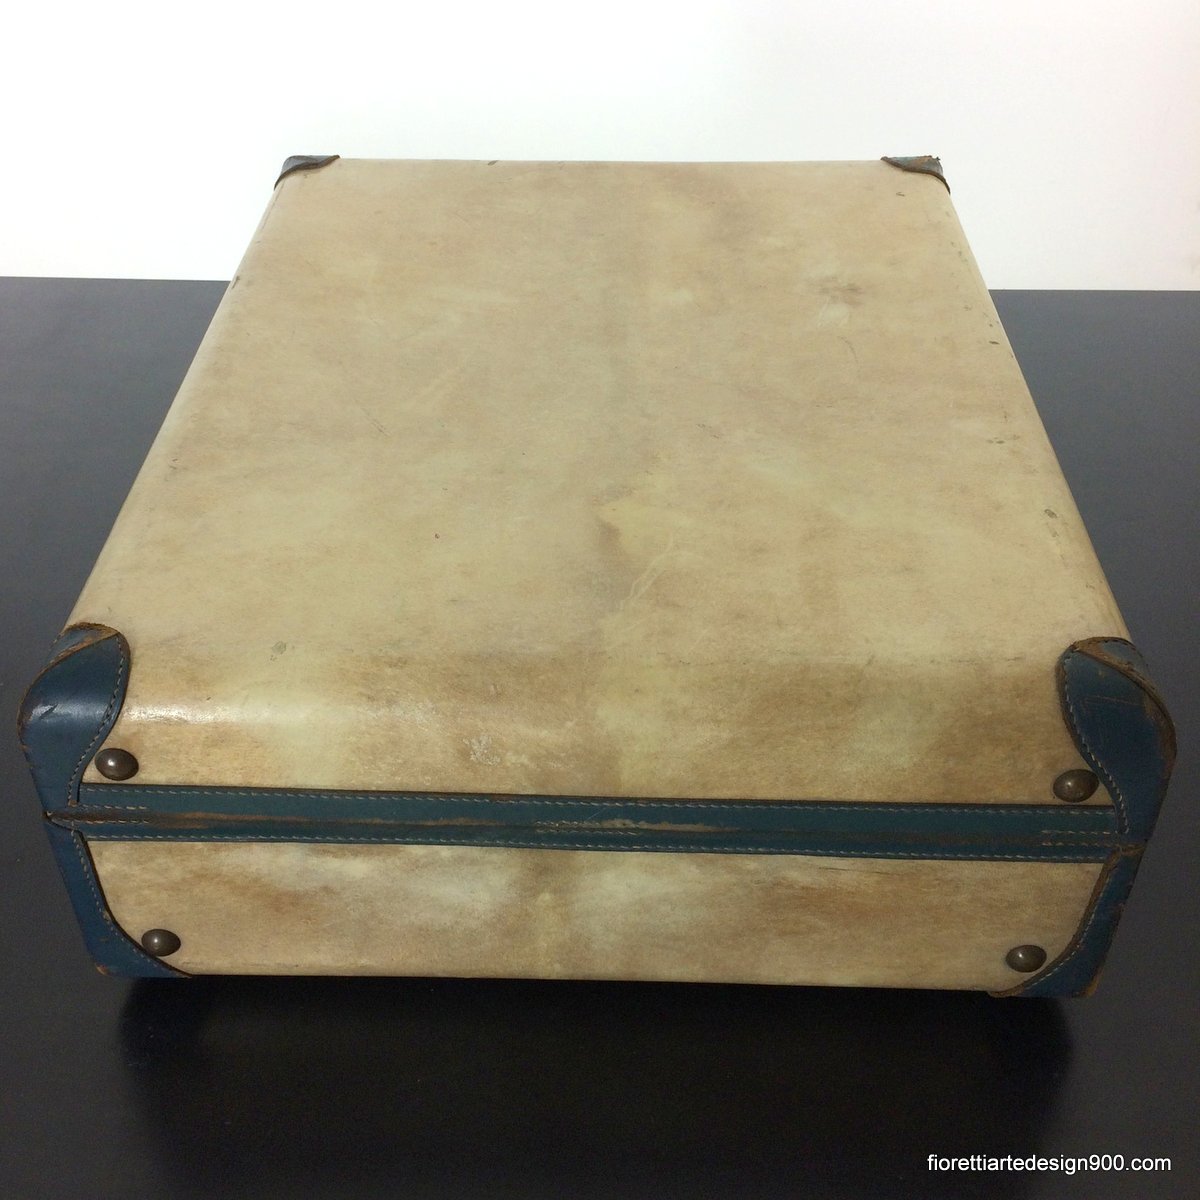 Valigia guardaroba pergamena parchment wardrobe suitcase valise